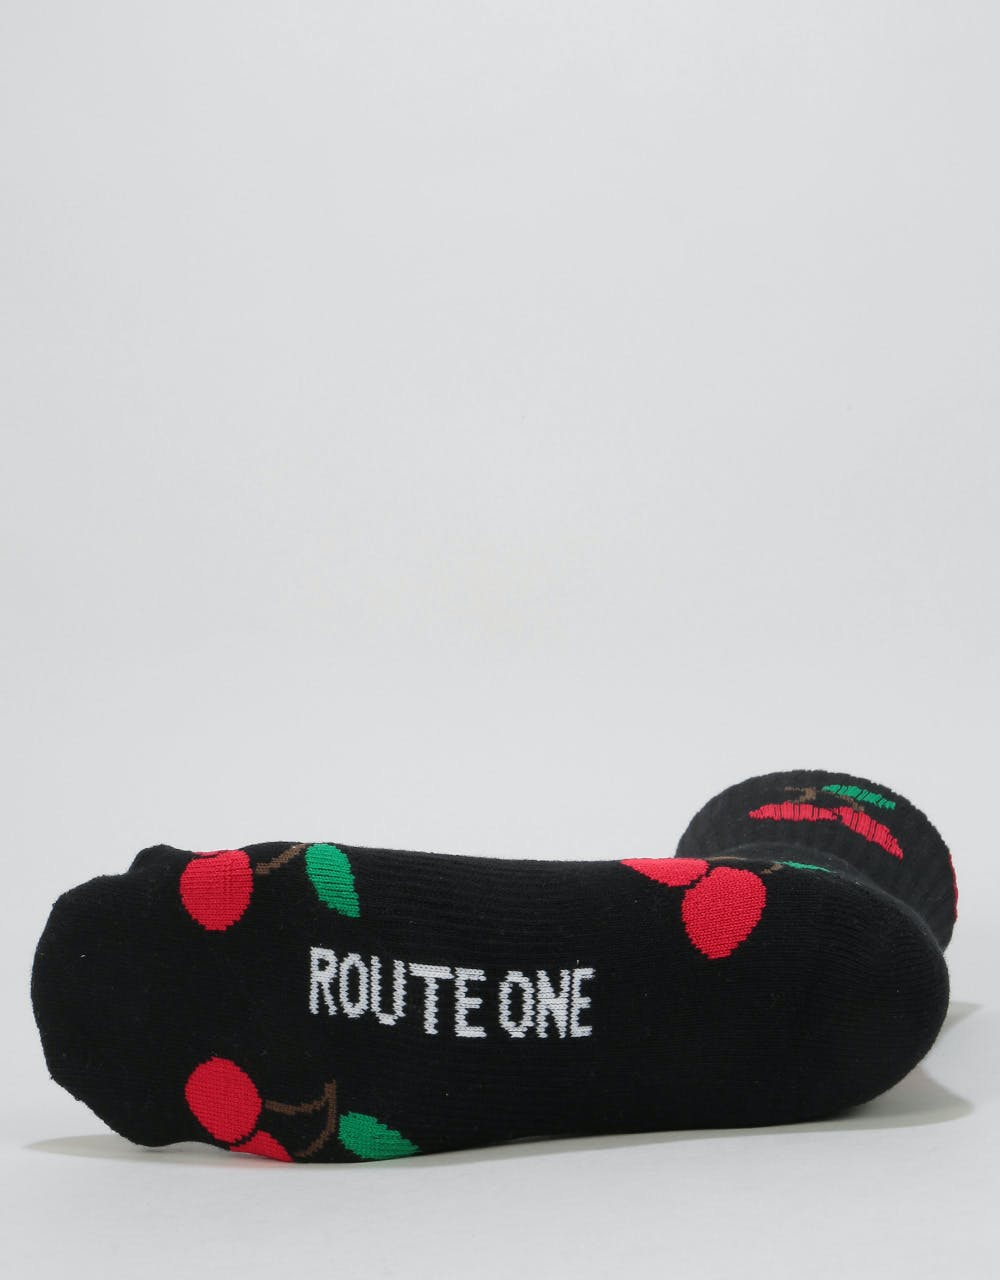 Route One Cherries Crew Socks - Black